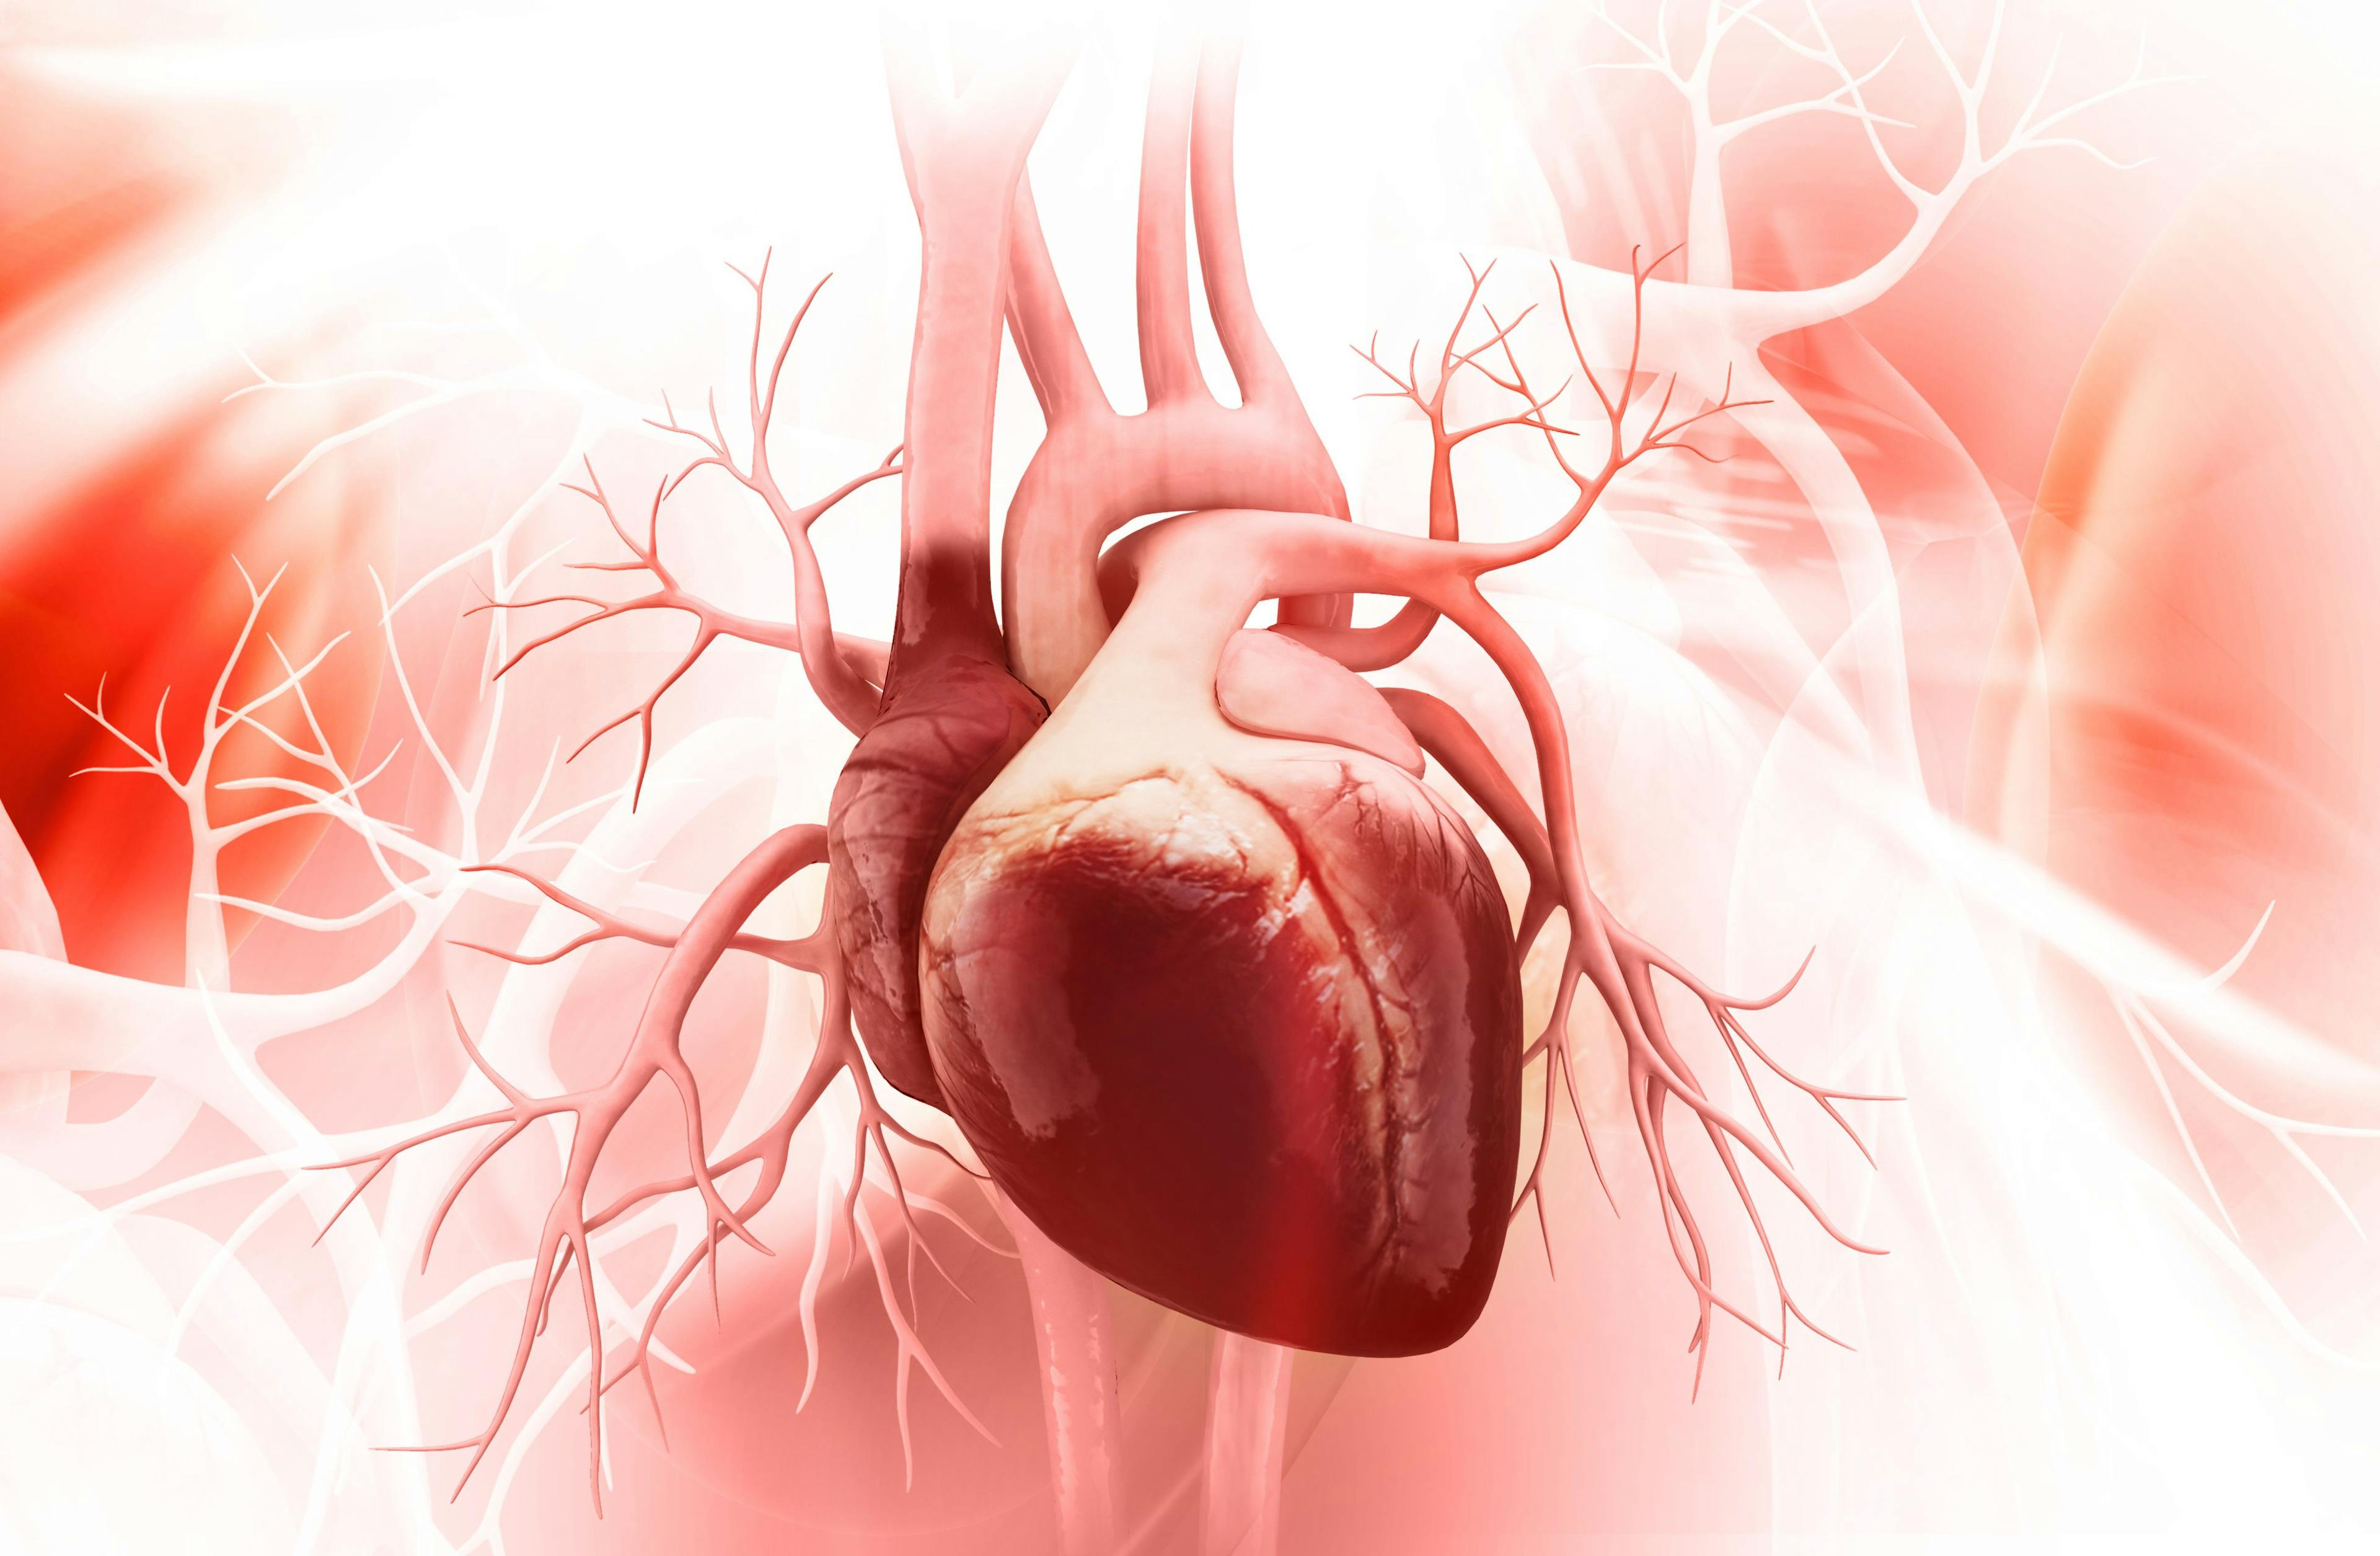 Human heart | Image credit: abhijith3747 - stock.adobe.com